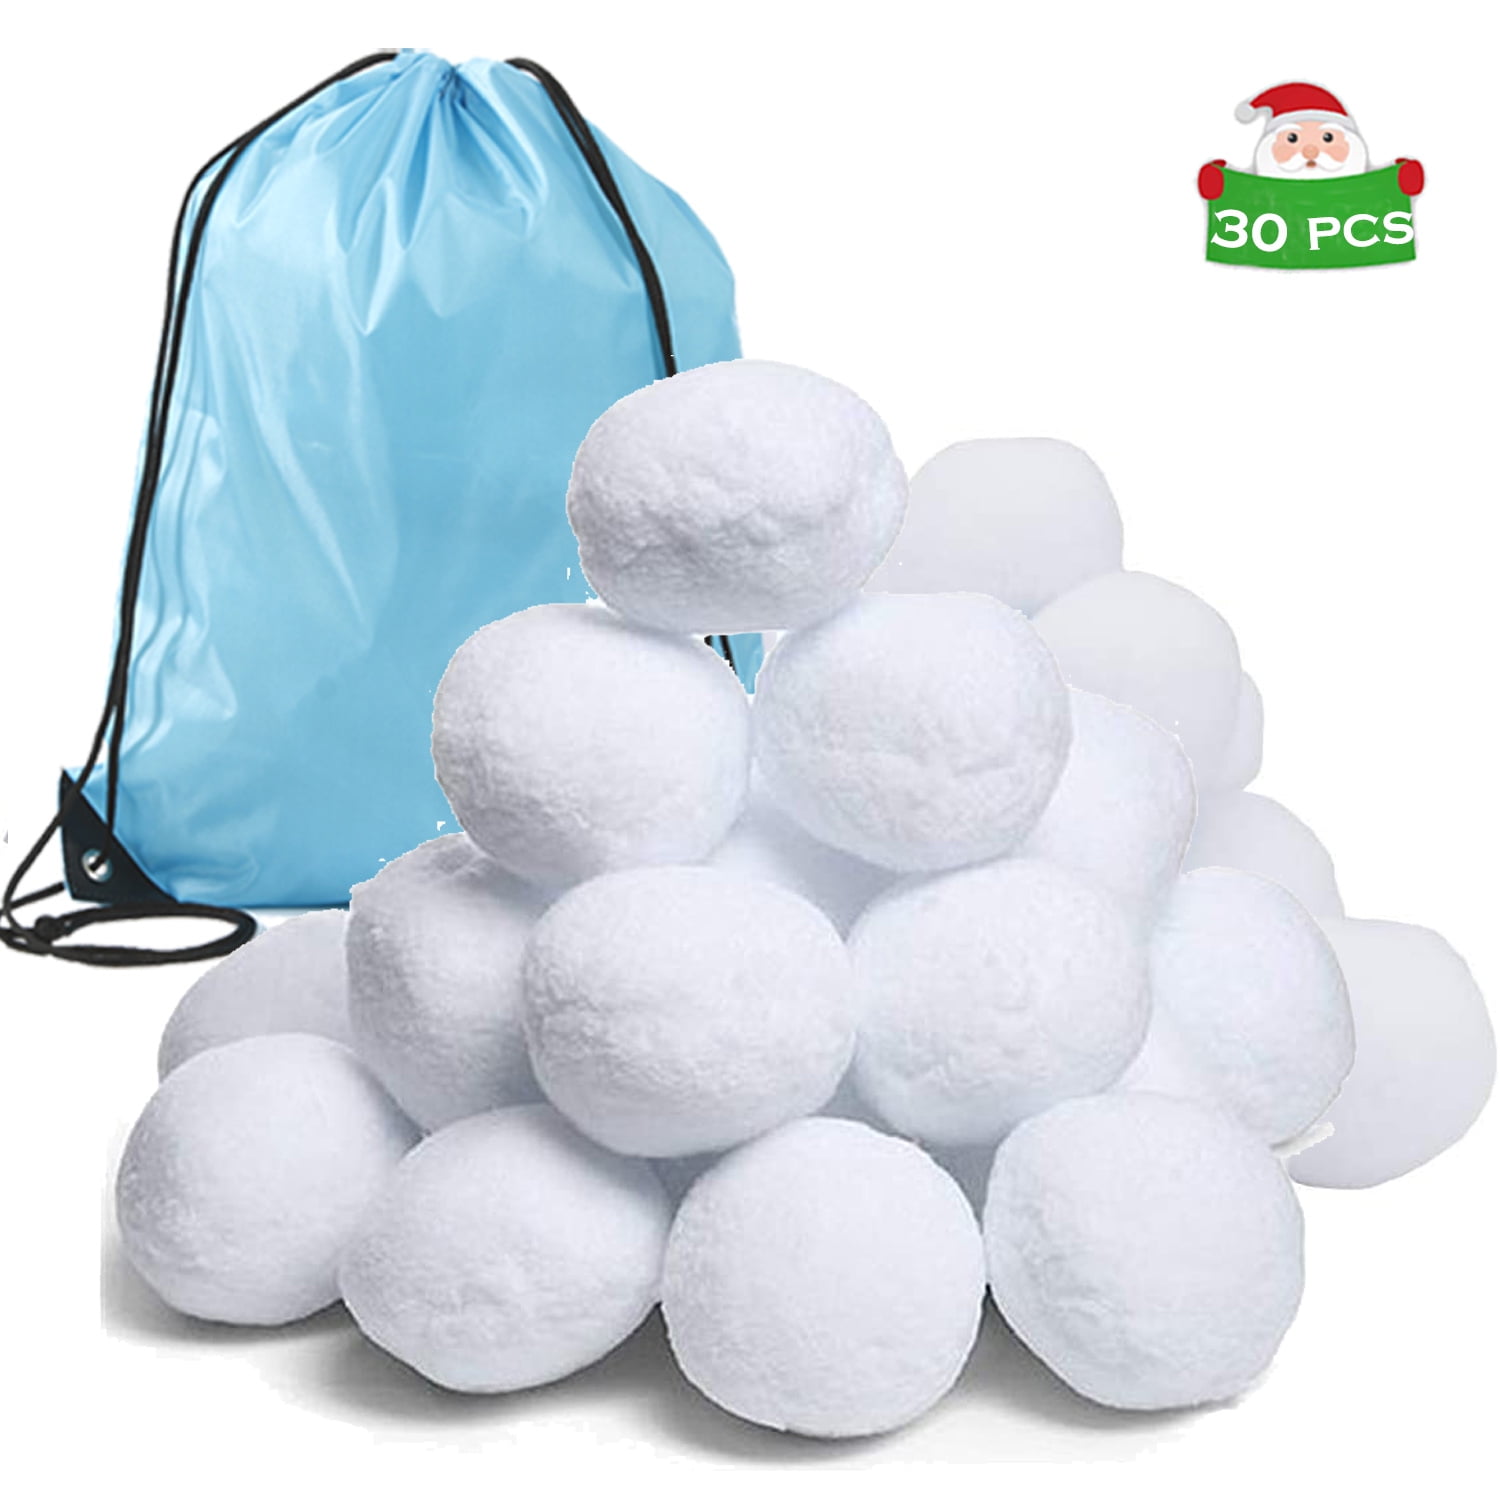 Indoor Snowballs For Kids Snow Fight Set,80 Pack Fake Snowballs